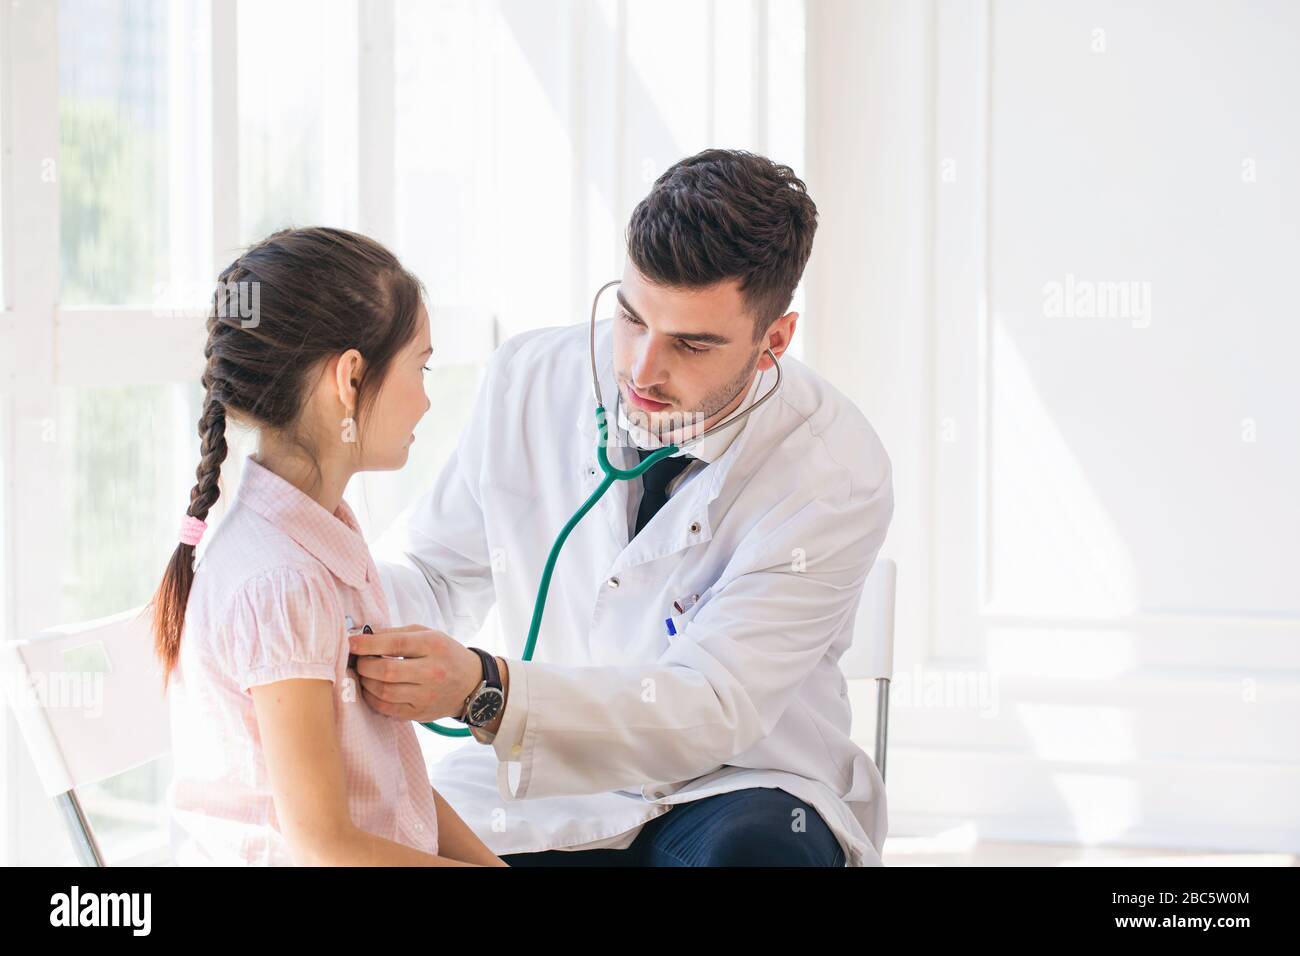 Exam doctor. Врач прослушивает девочку. Врач педиатр фото. Врач педиатр с ребенком. Doctor examining child.